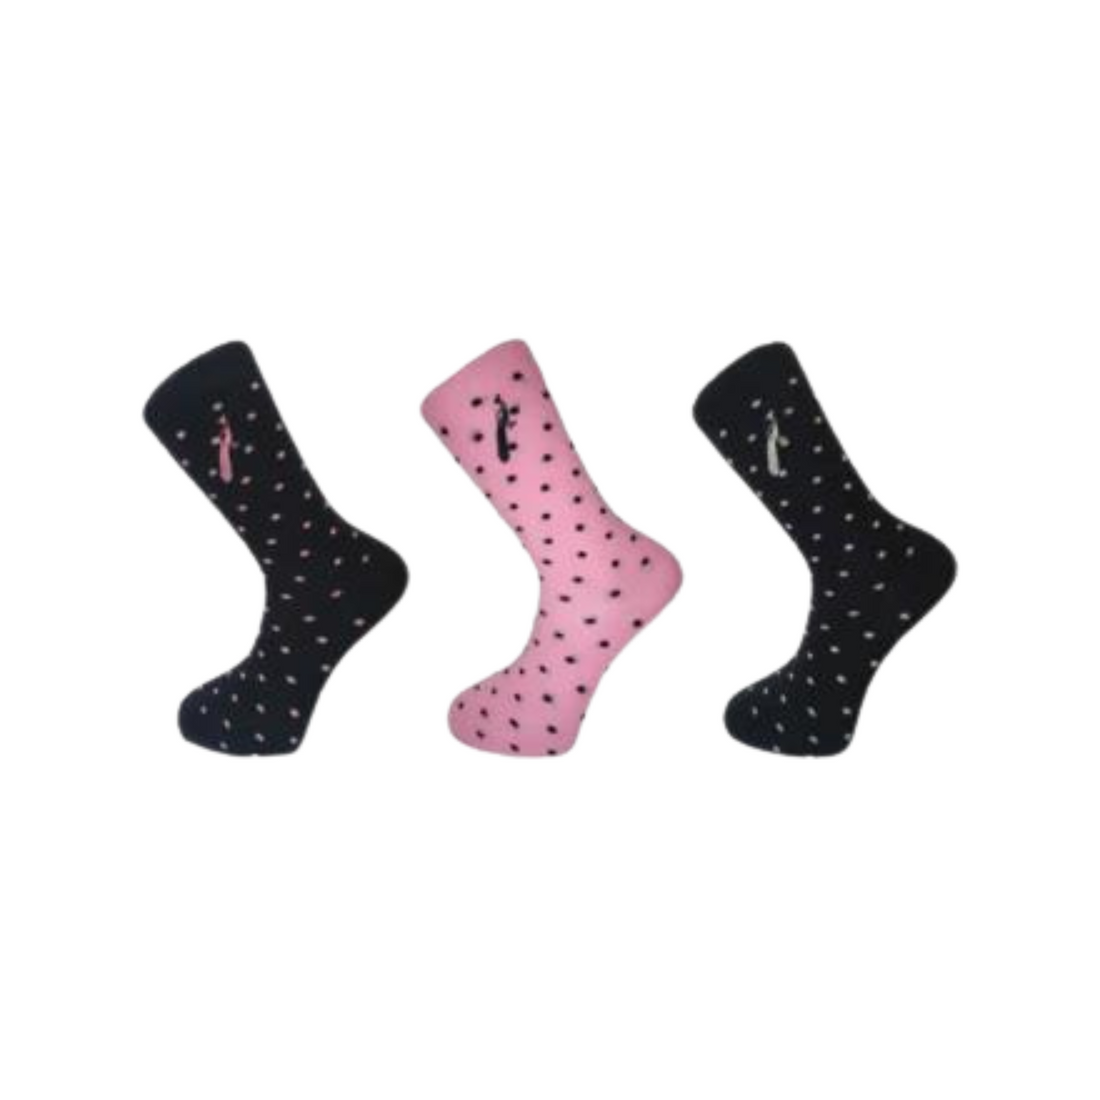 Hortons Heritage Spotty Socks Set of 3